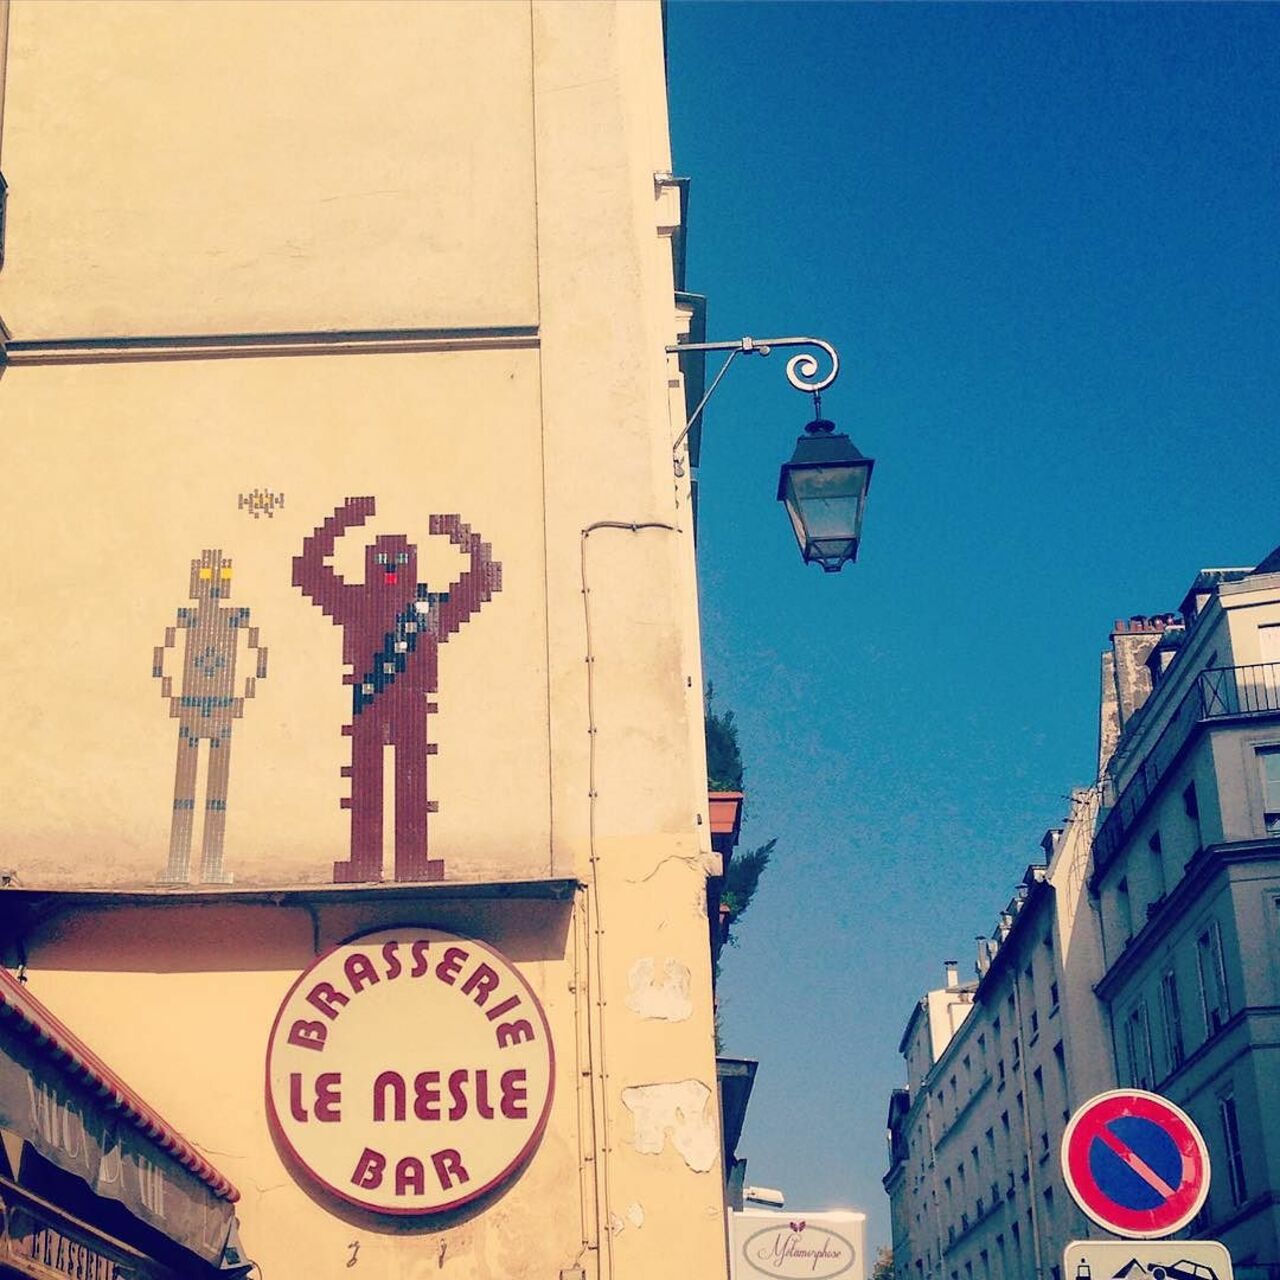 circumjacent_fr: #Paris #graffiti photo by ore25fr http://ift.tt/1WdISq2 #StreetArt https://t.co/qDJ600nVcw